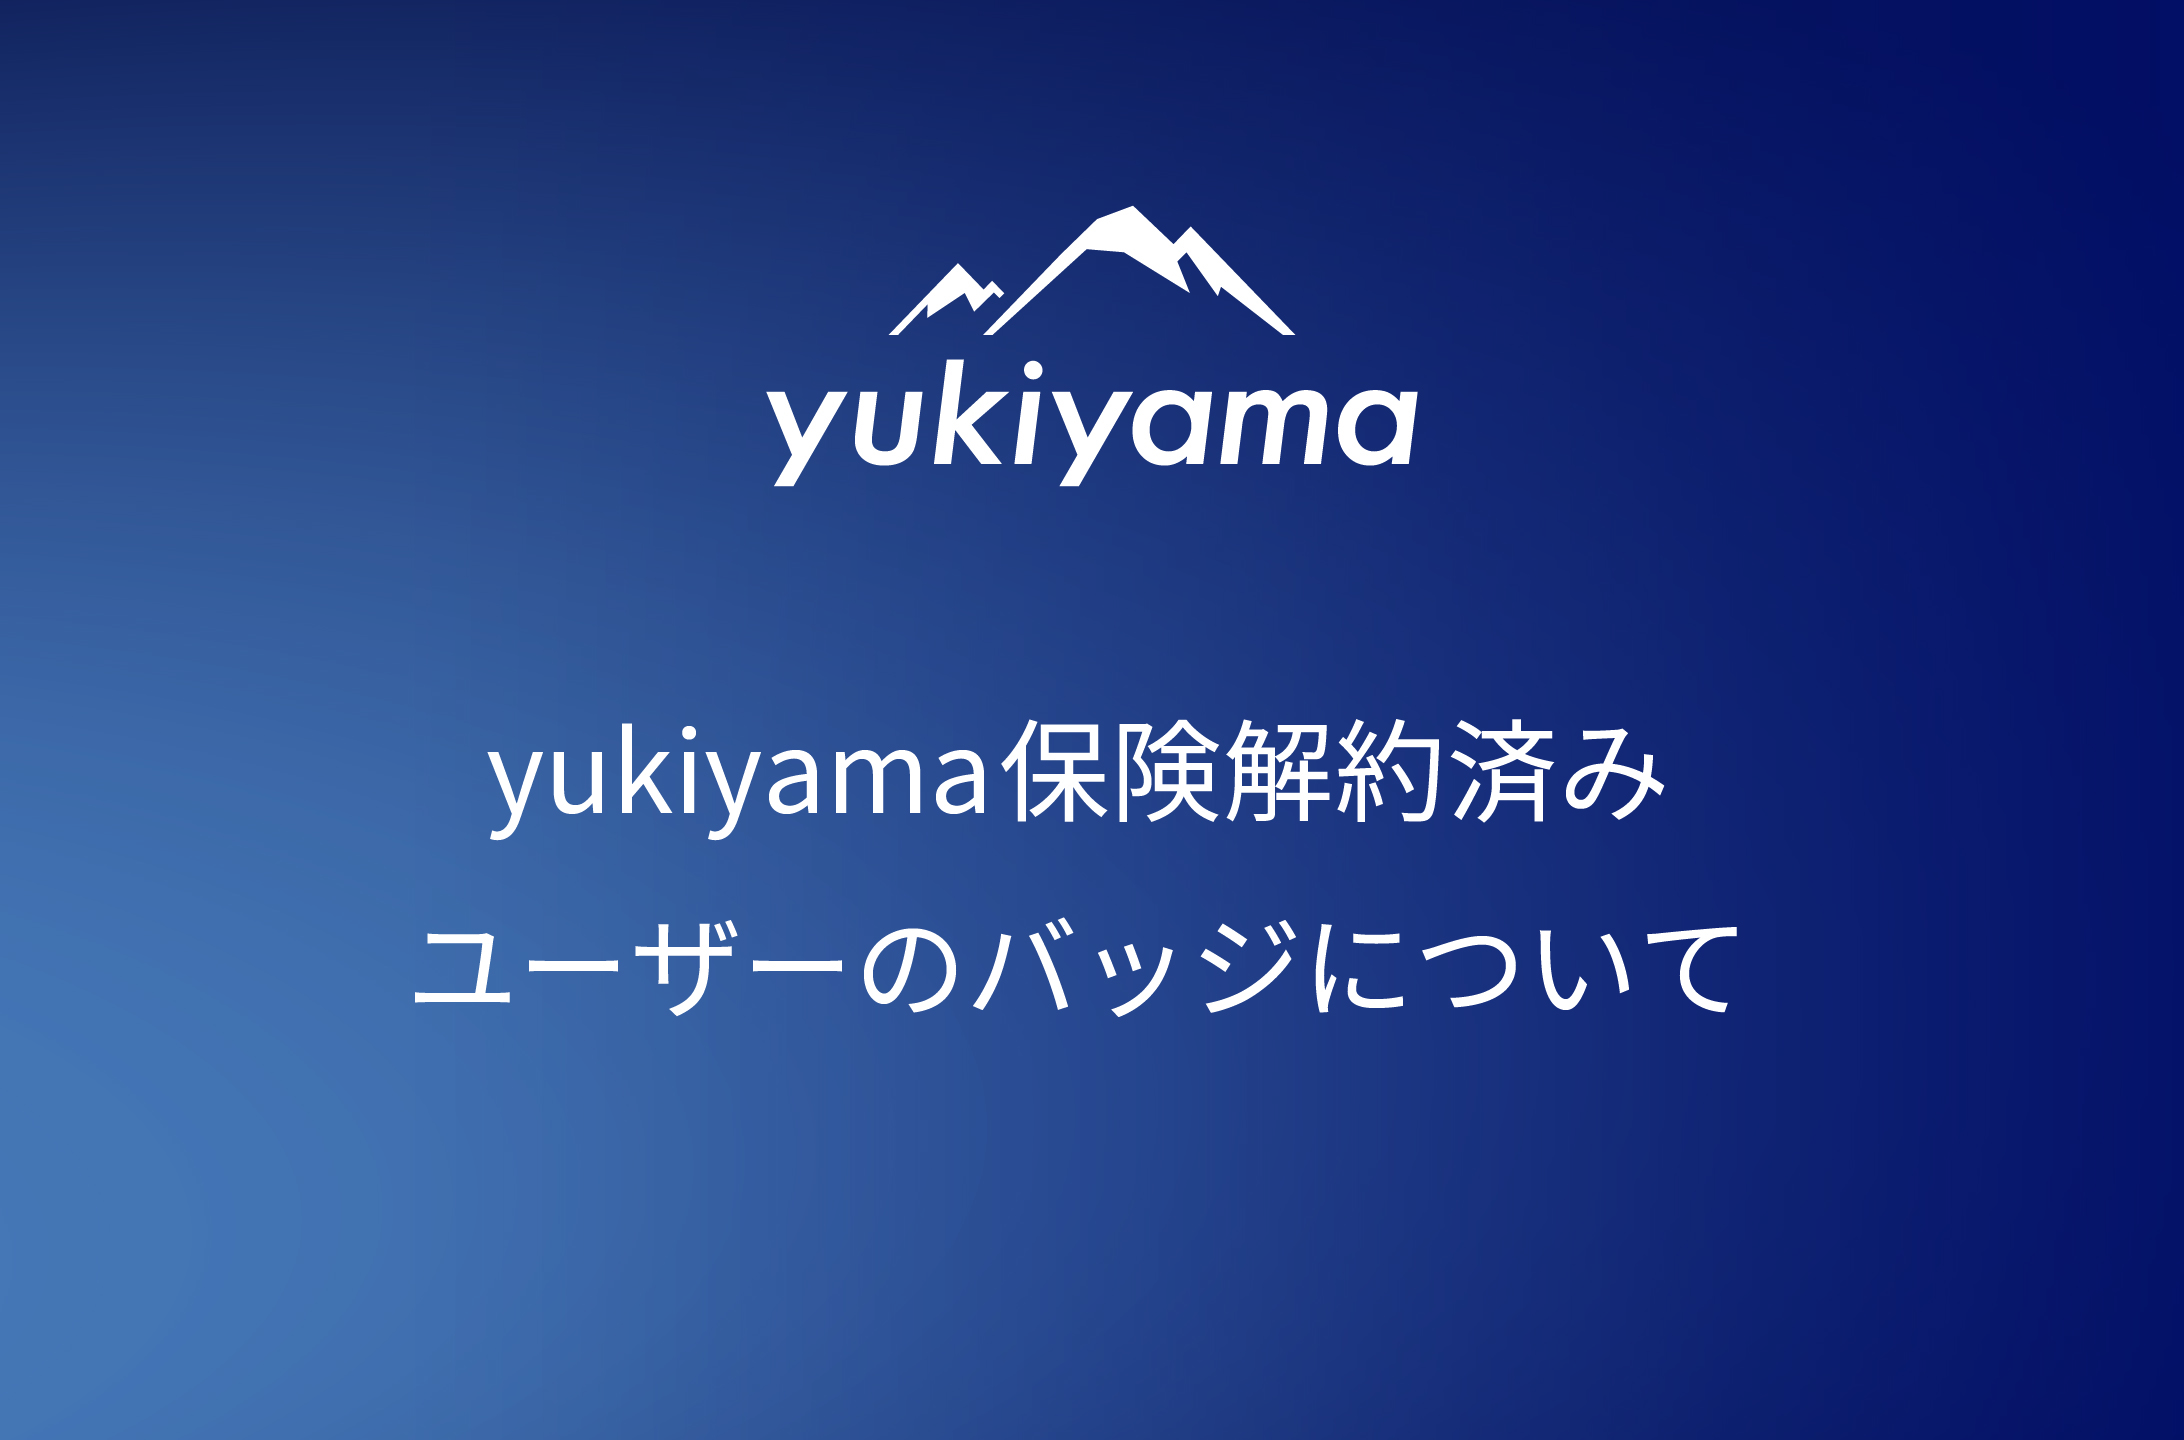 yukiyama保険解約済みユーザーのバッジについて